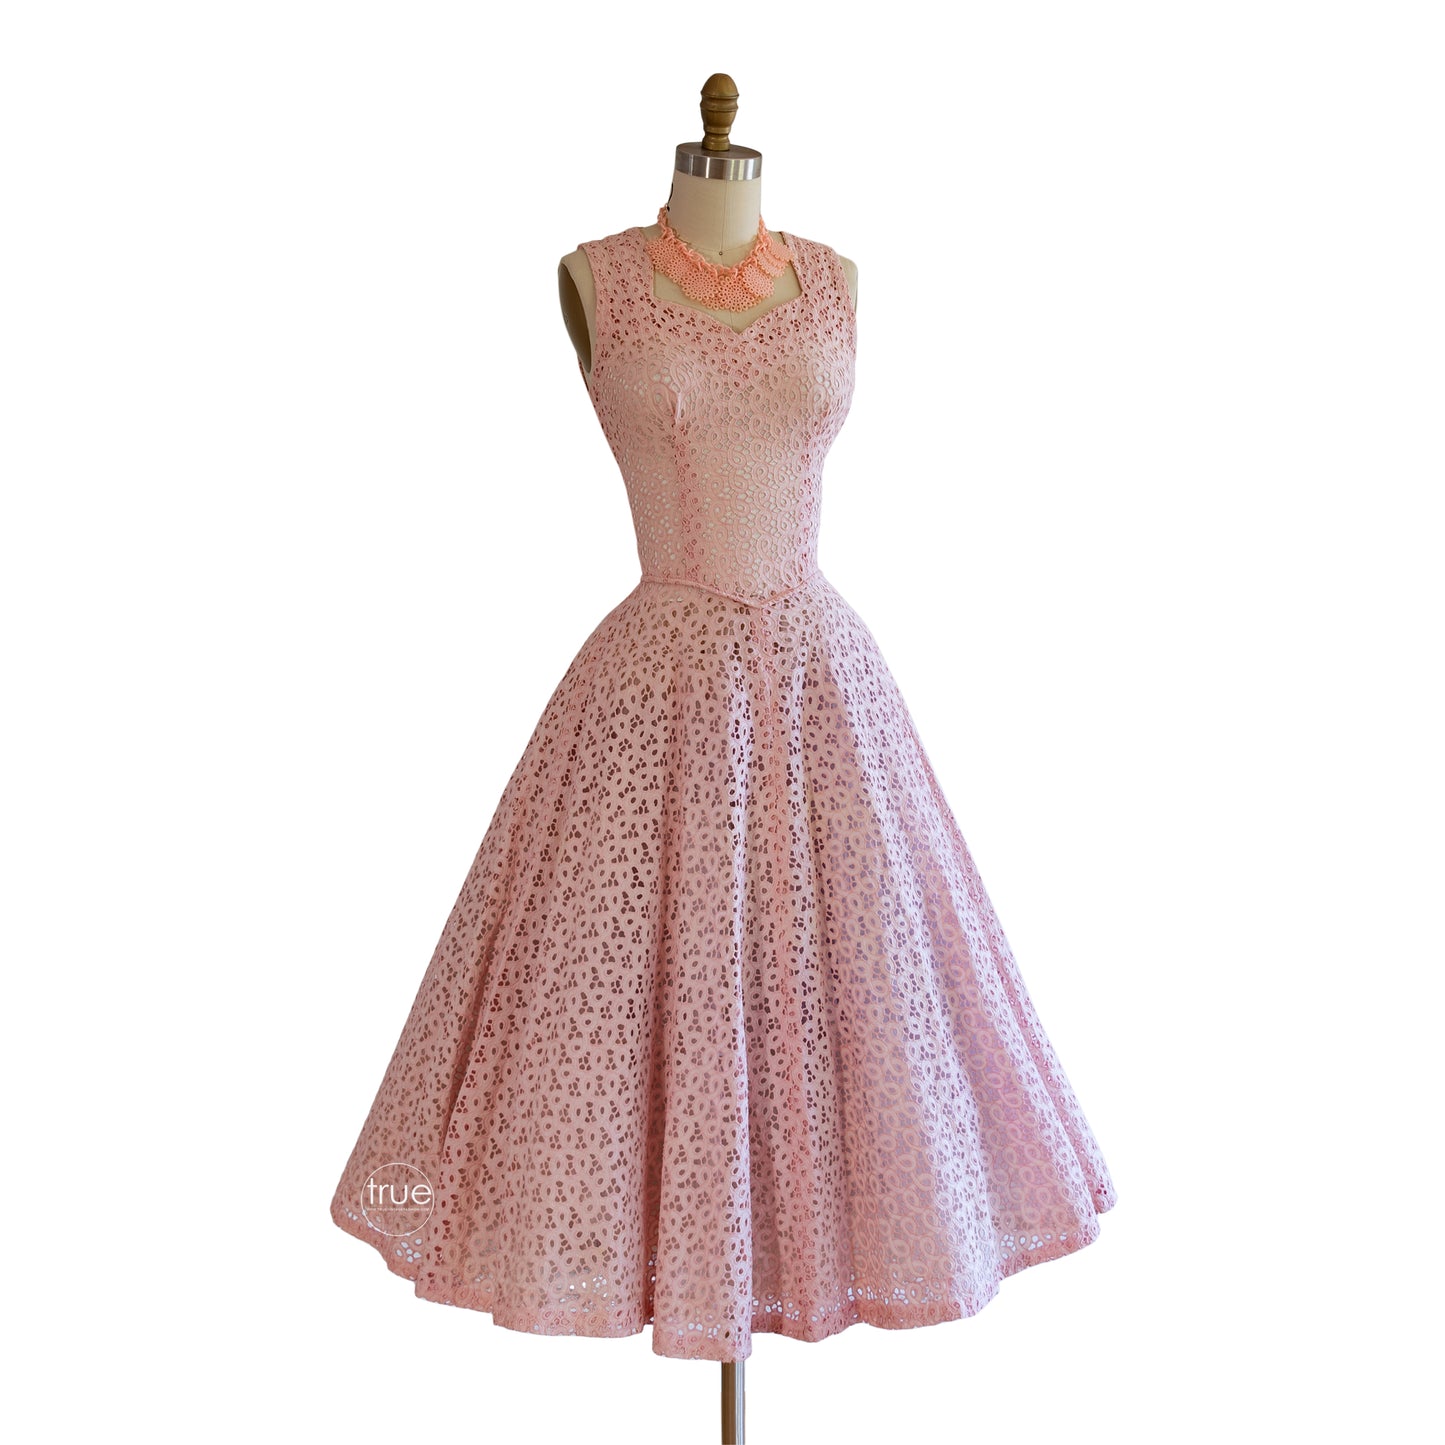 vintage 1950's dress ...flirty pretty in pink cotton eyelet semi sheer full skirt dress